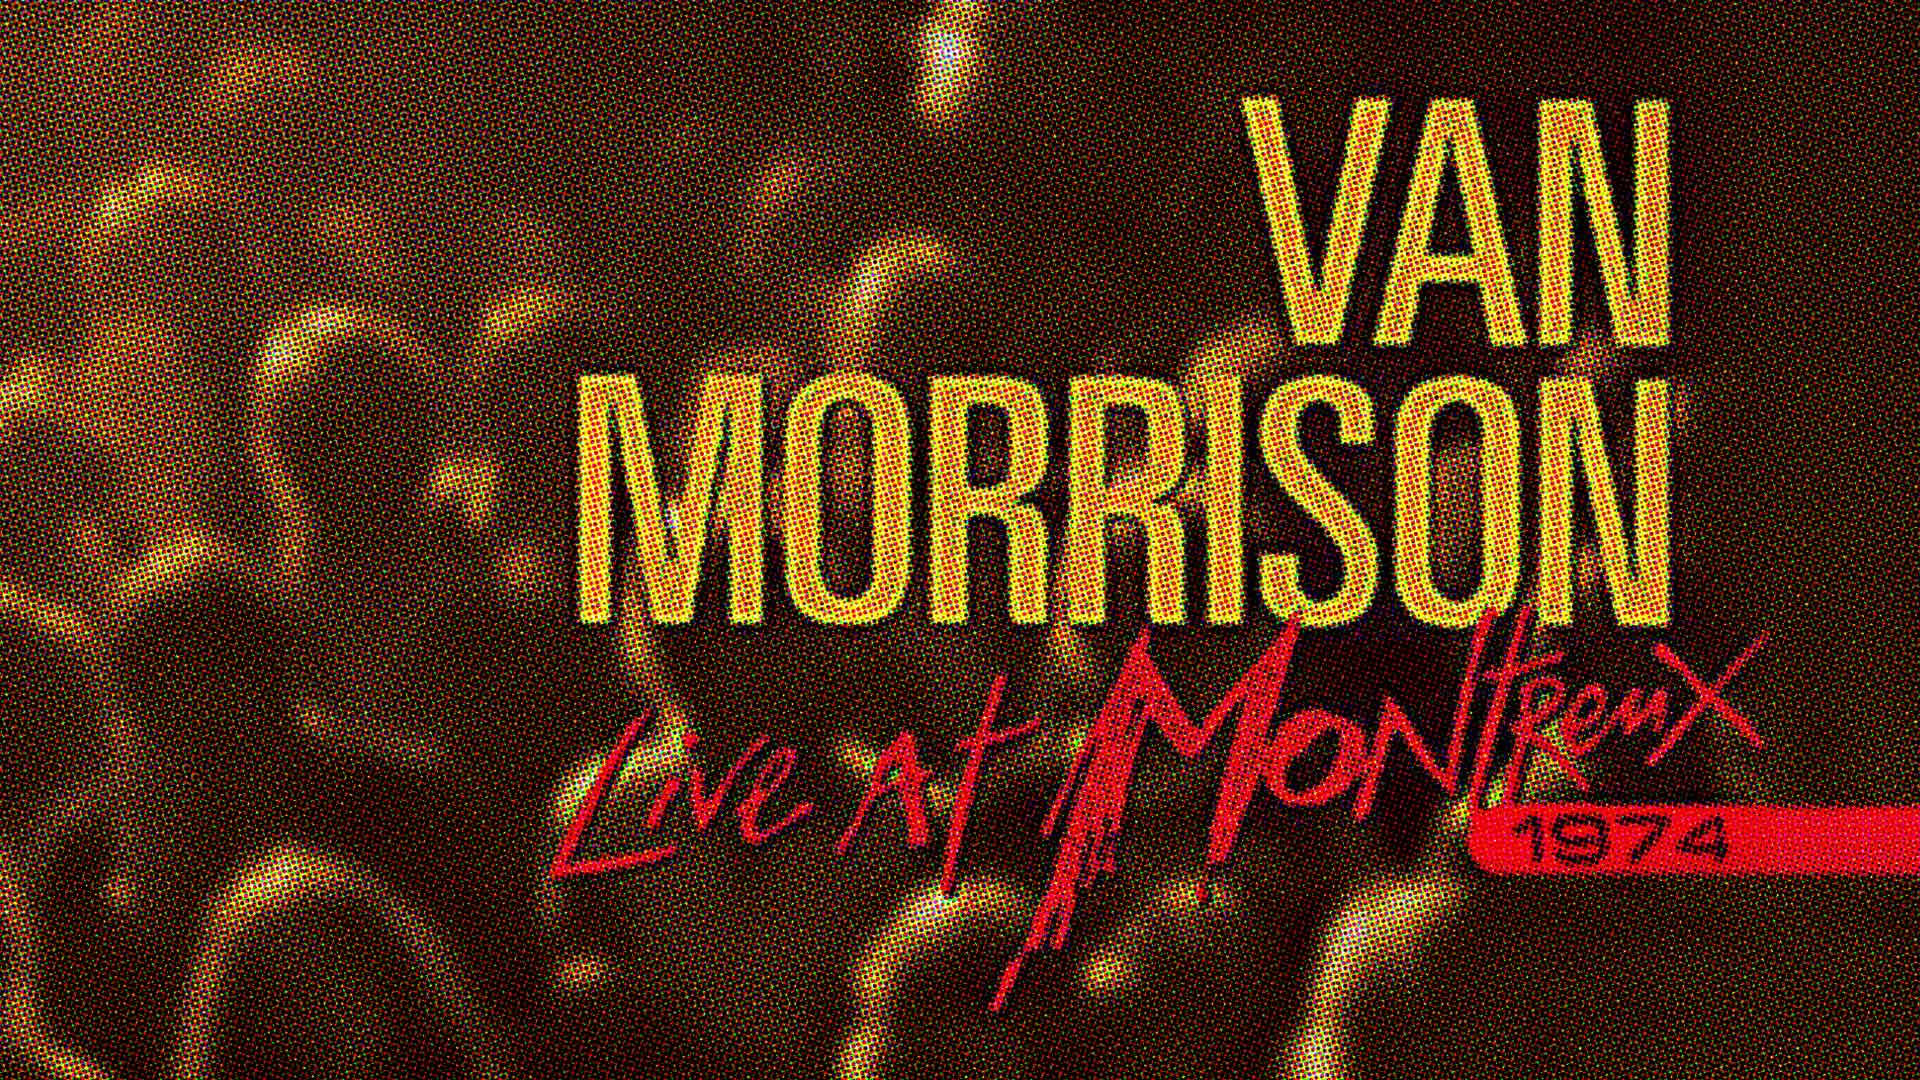 Van Morrison Montreux Album Cover Wallpaper